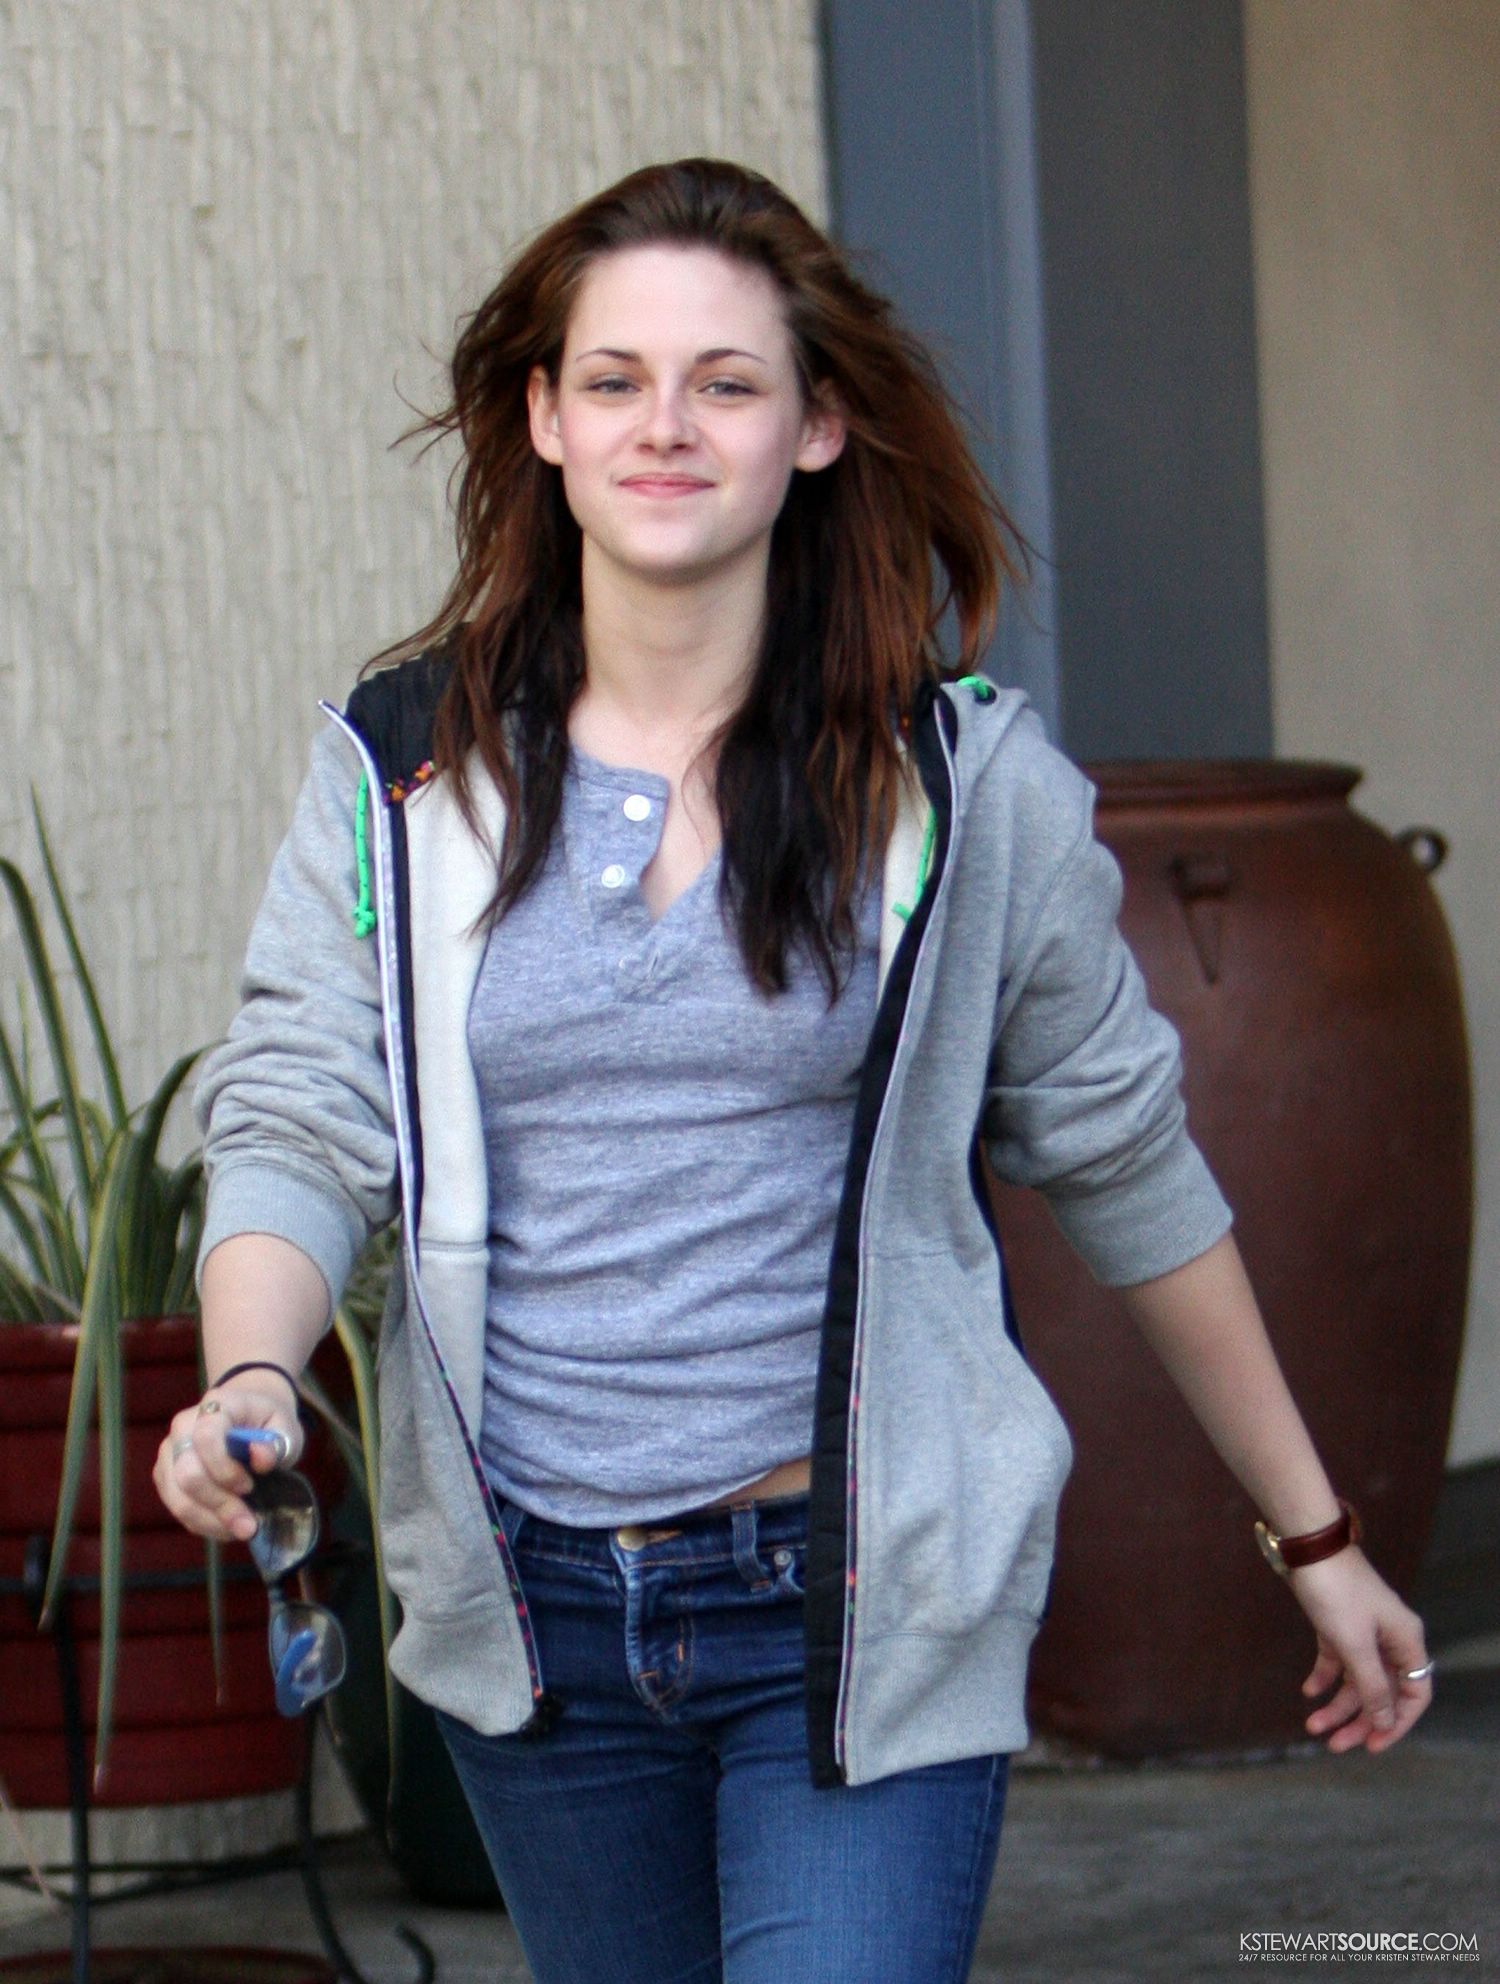 In Los Angeles - March 3 HQ - 04 - Kristen Stewart Pictures.